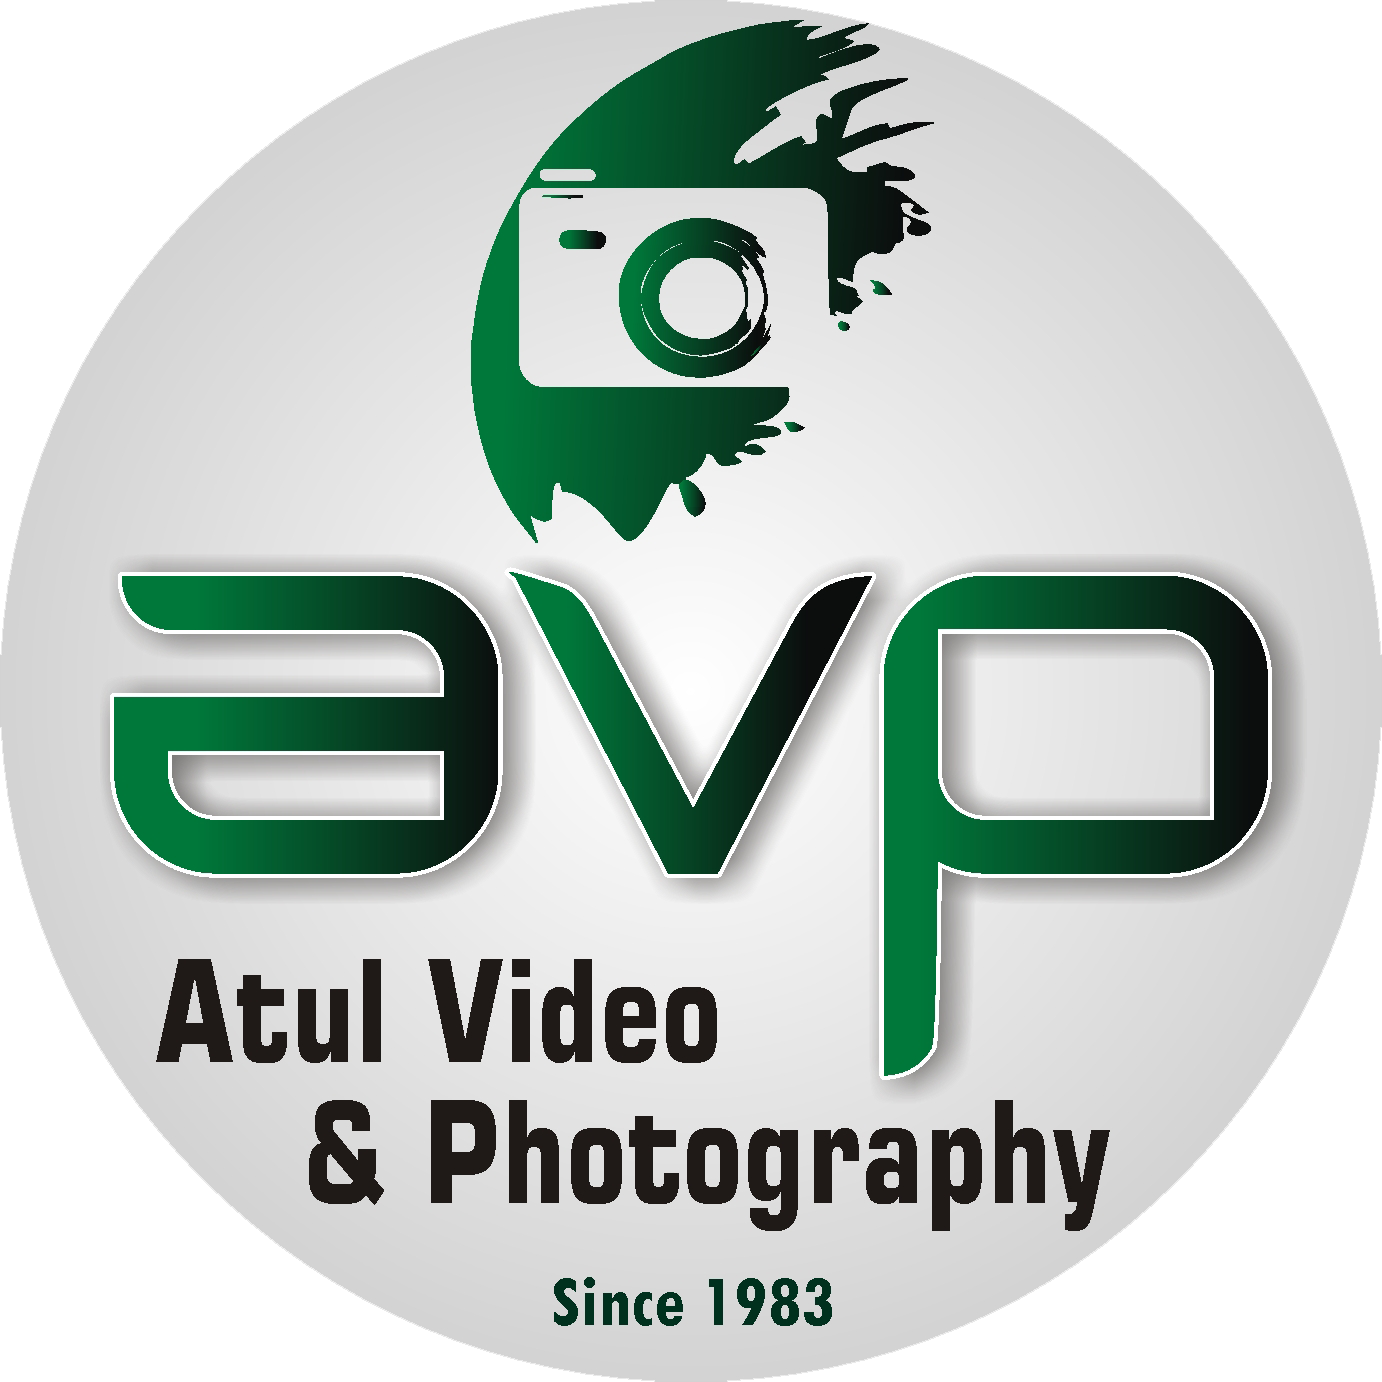 Avp Clicks|Photographer|Event Services